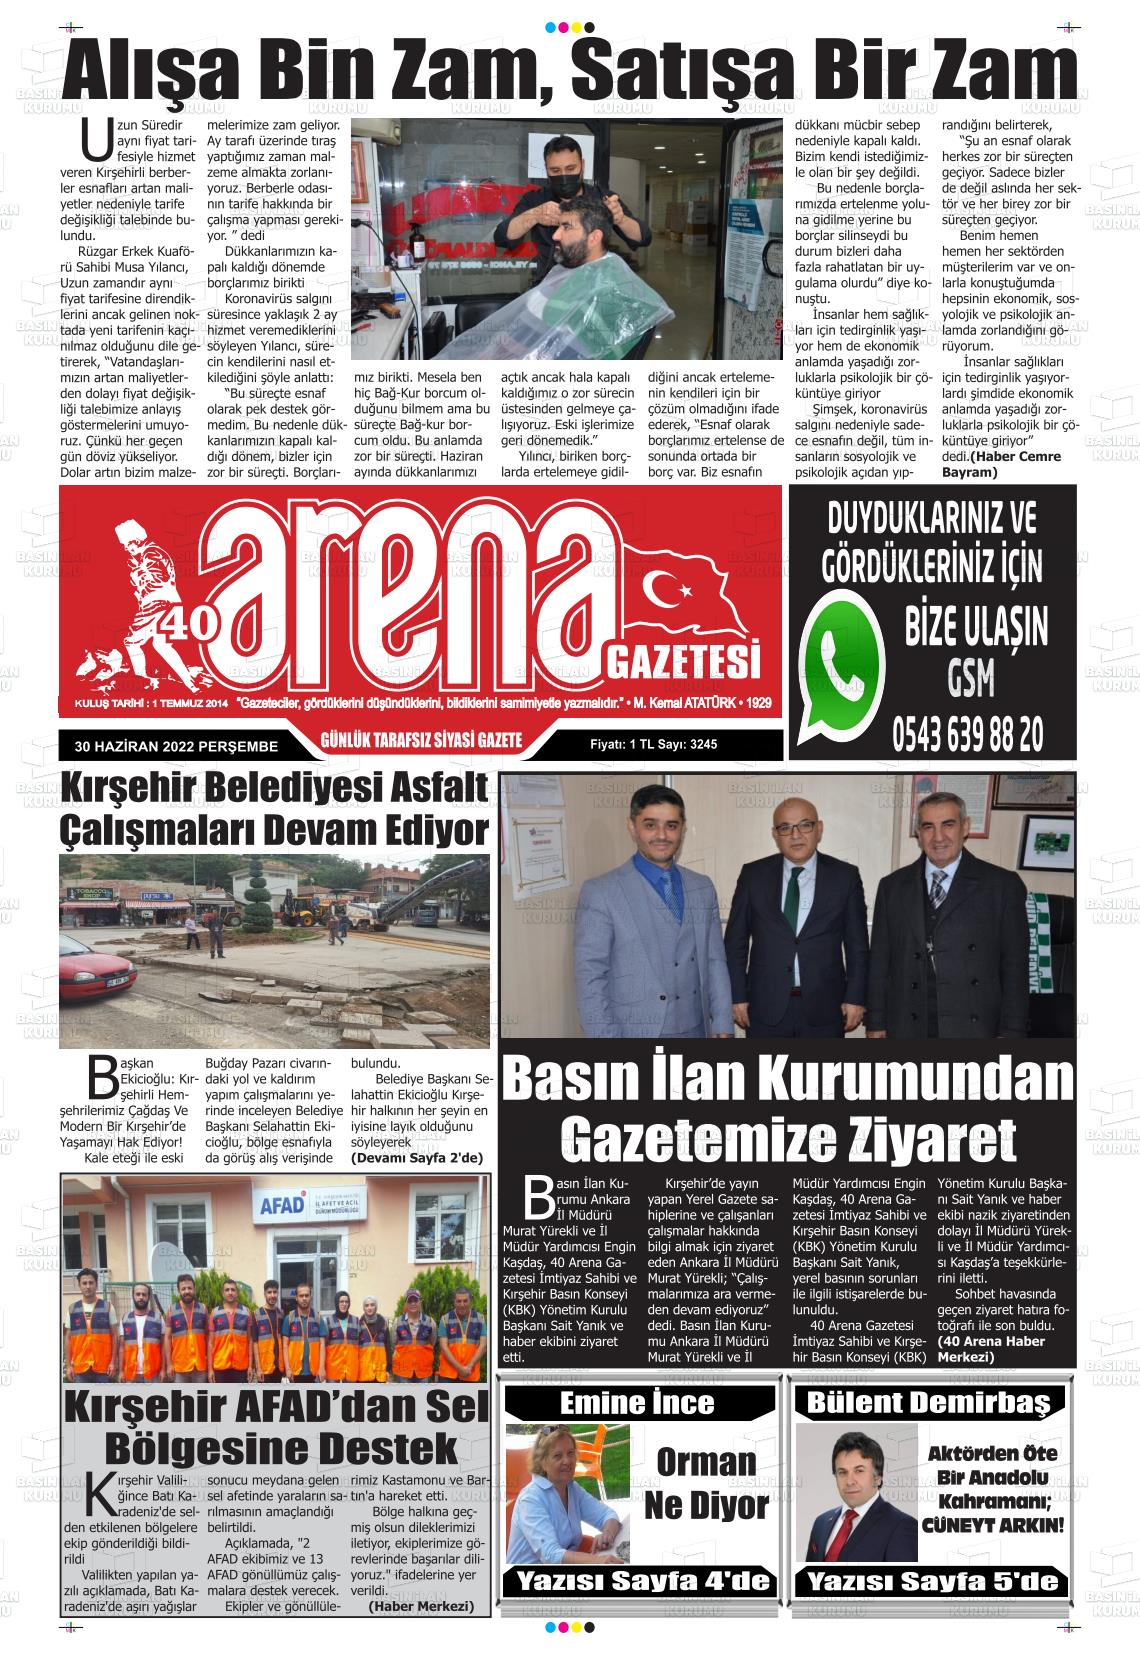 02 Temmuz 2022 Kırşehir Arena Gazete Manşeti